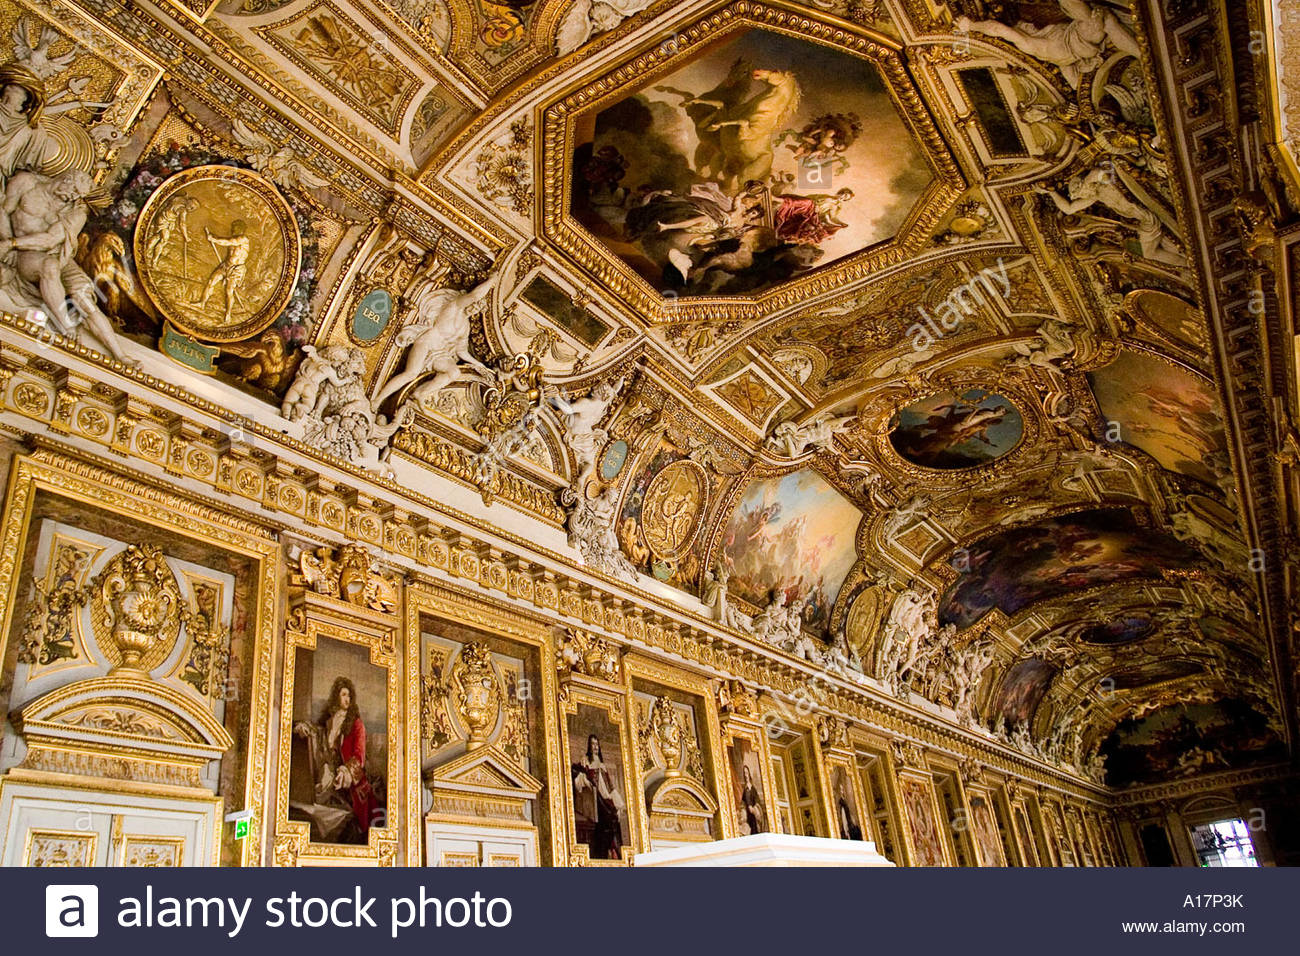 Ceiling Inside The Musee Du Louvre Paris France Stock Photo